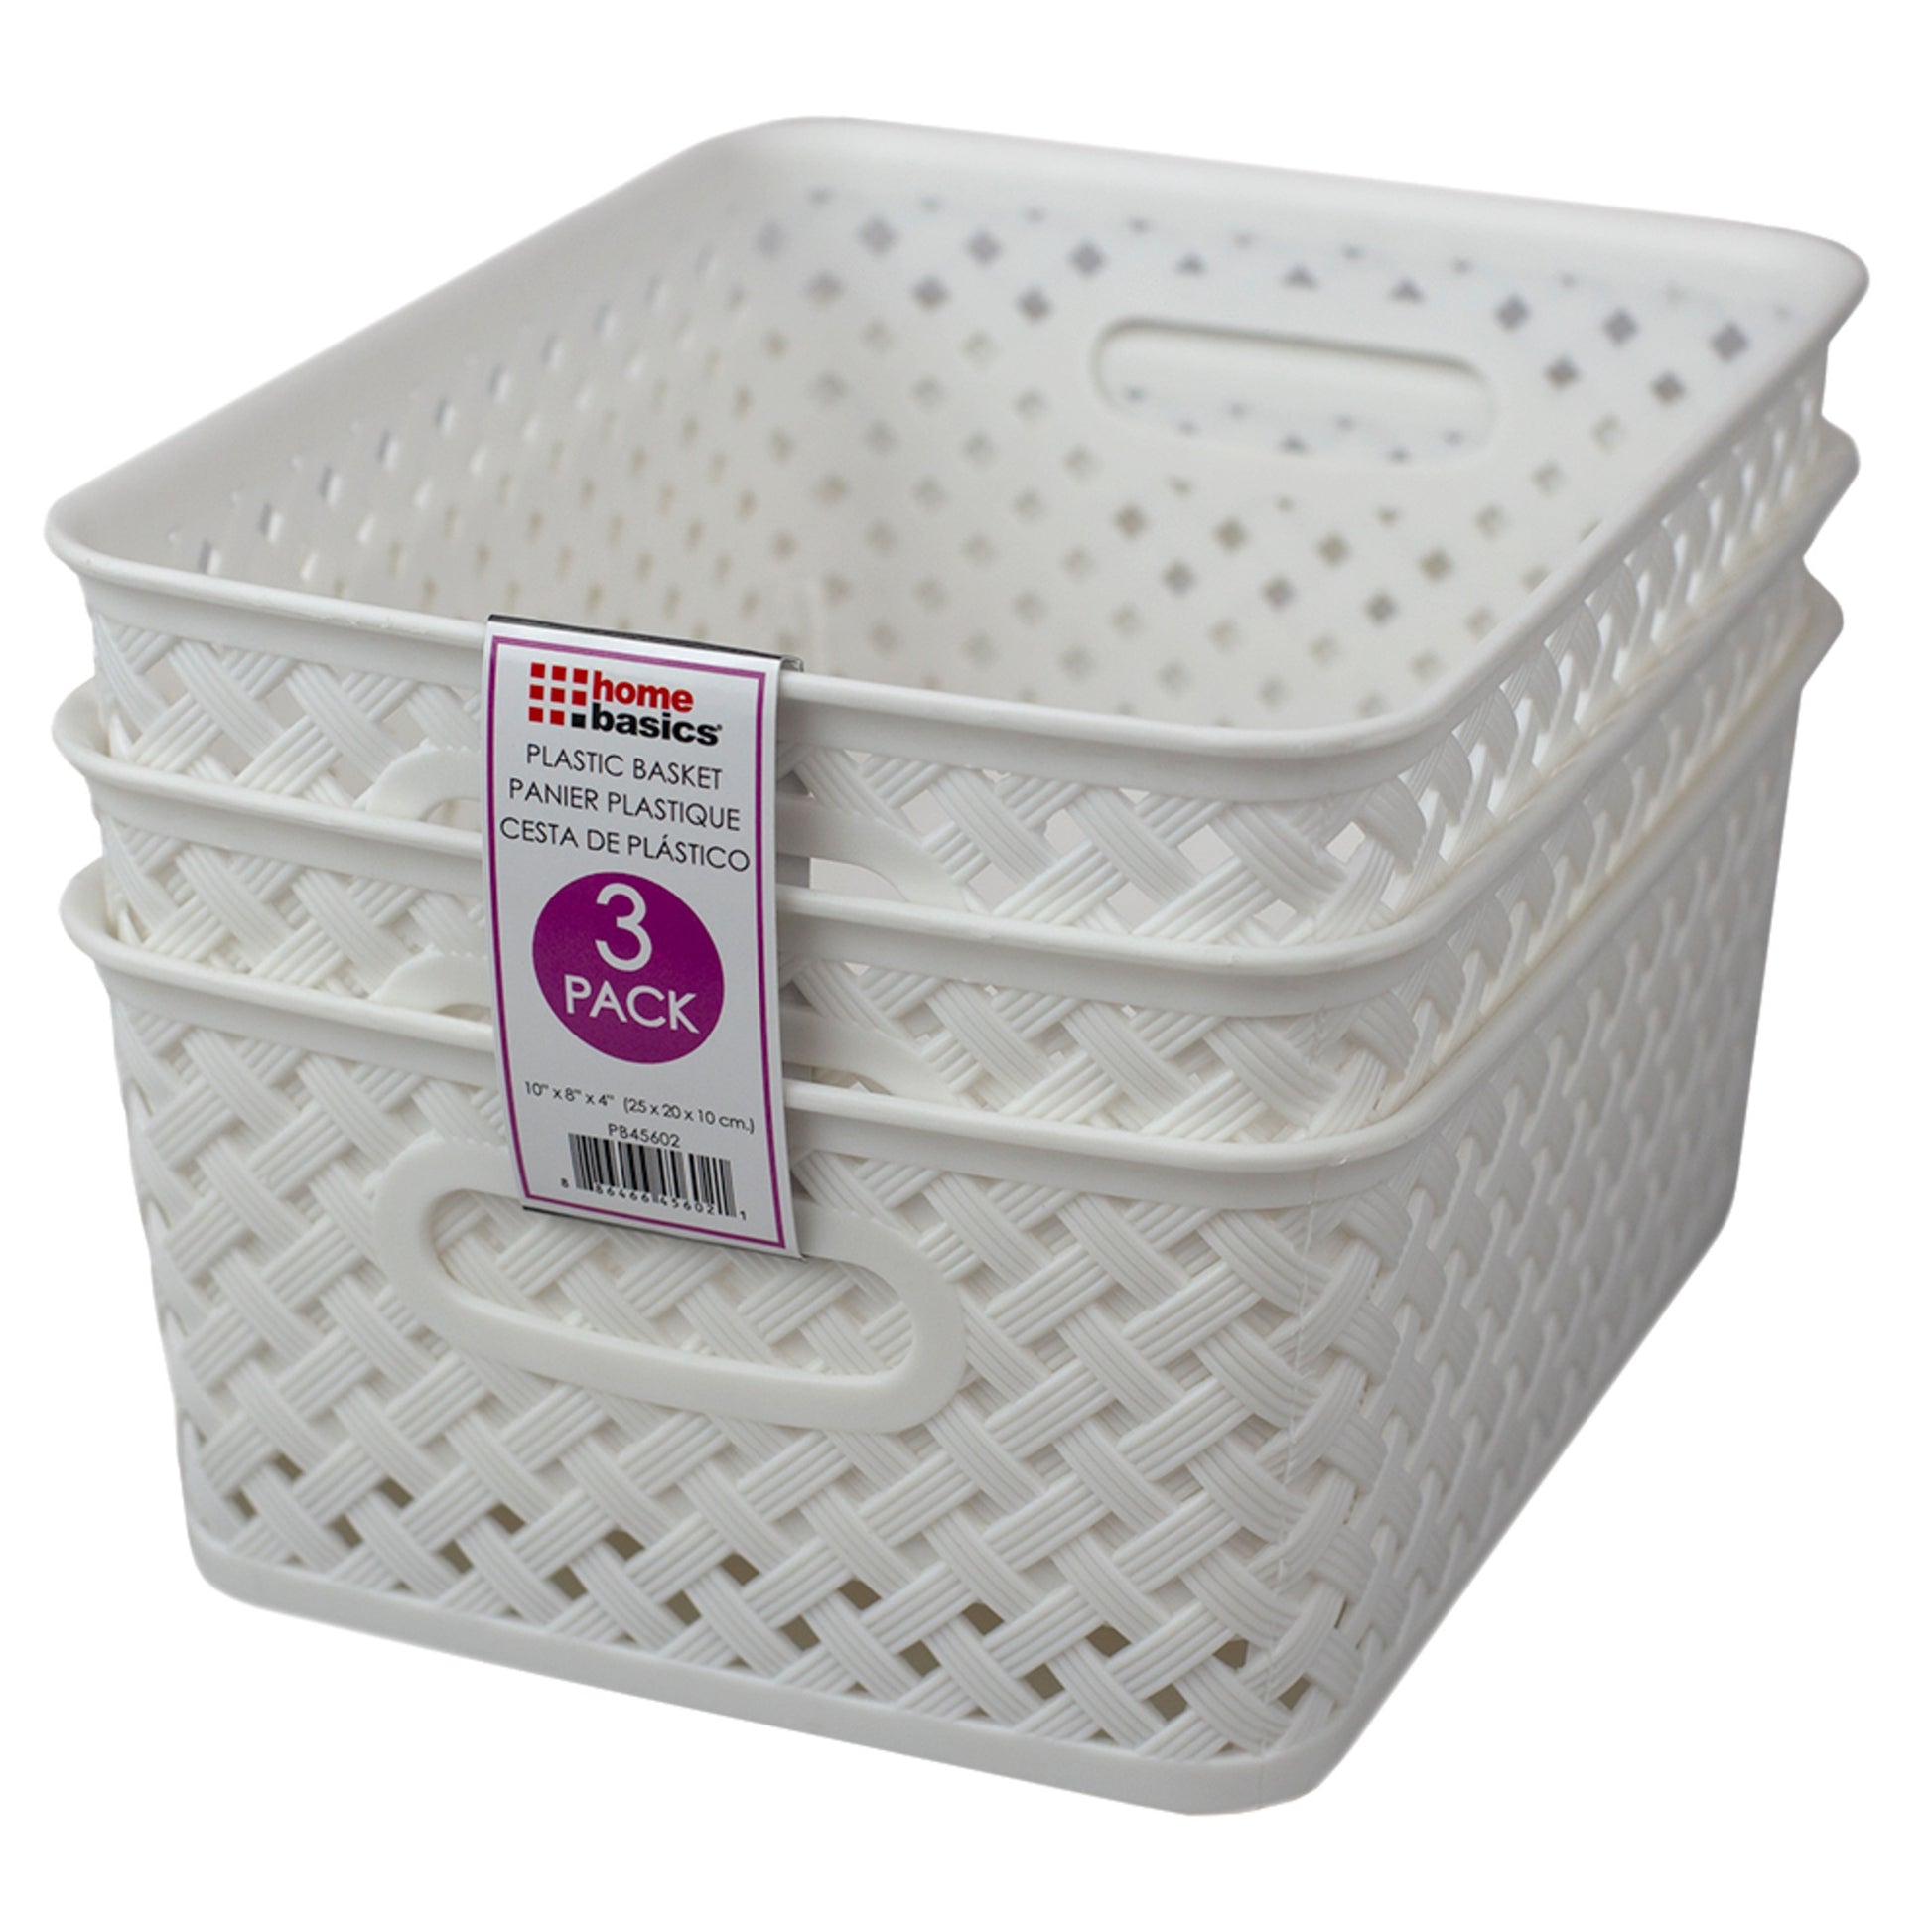 4 pieces Home Basics 20 Liter Plastic Basket With Handles, Grey